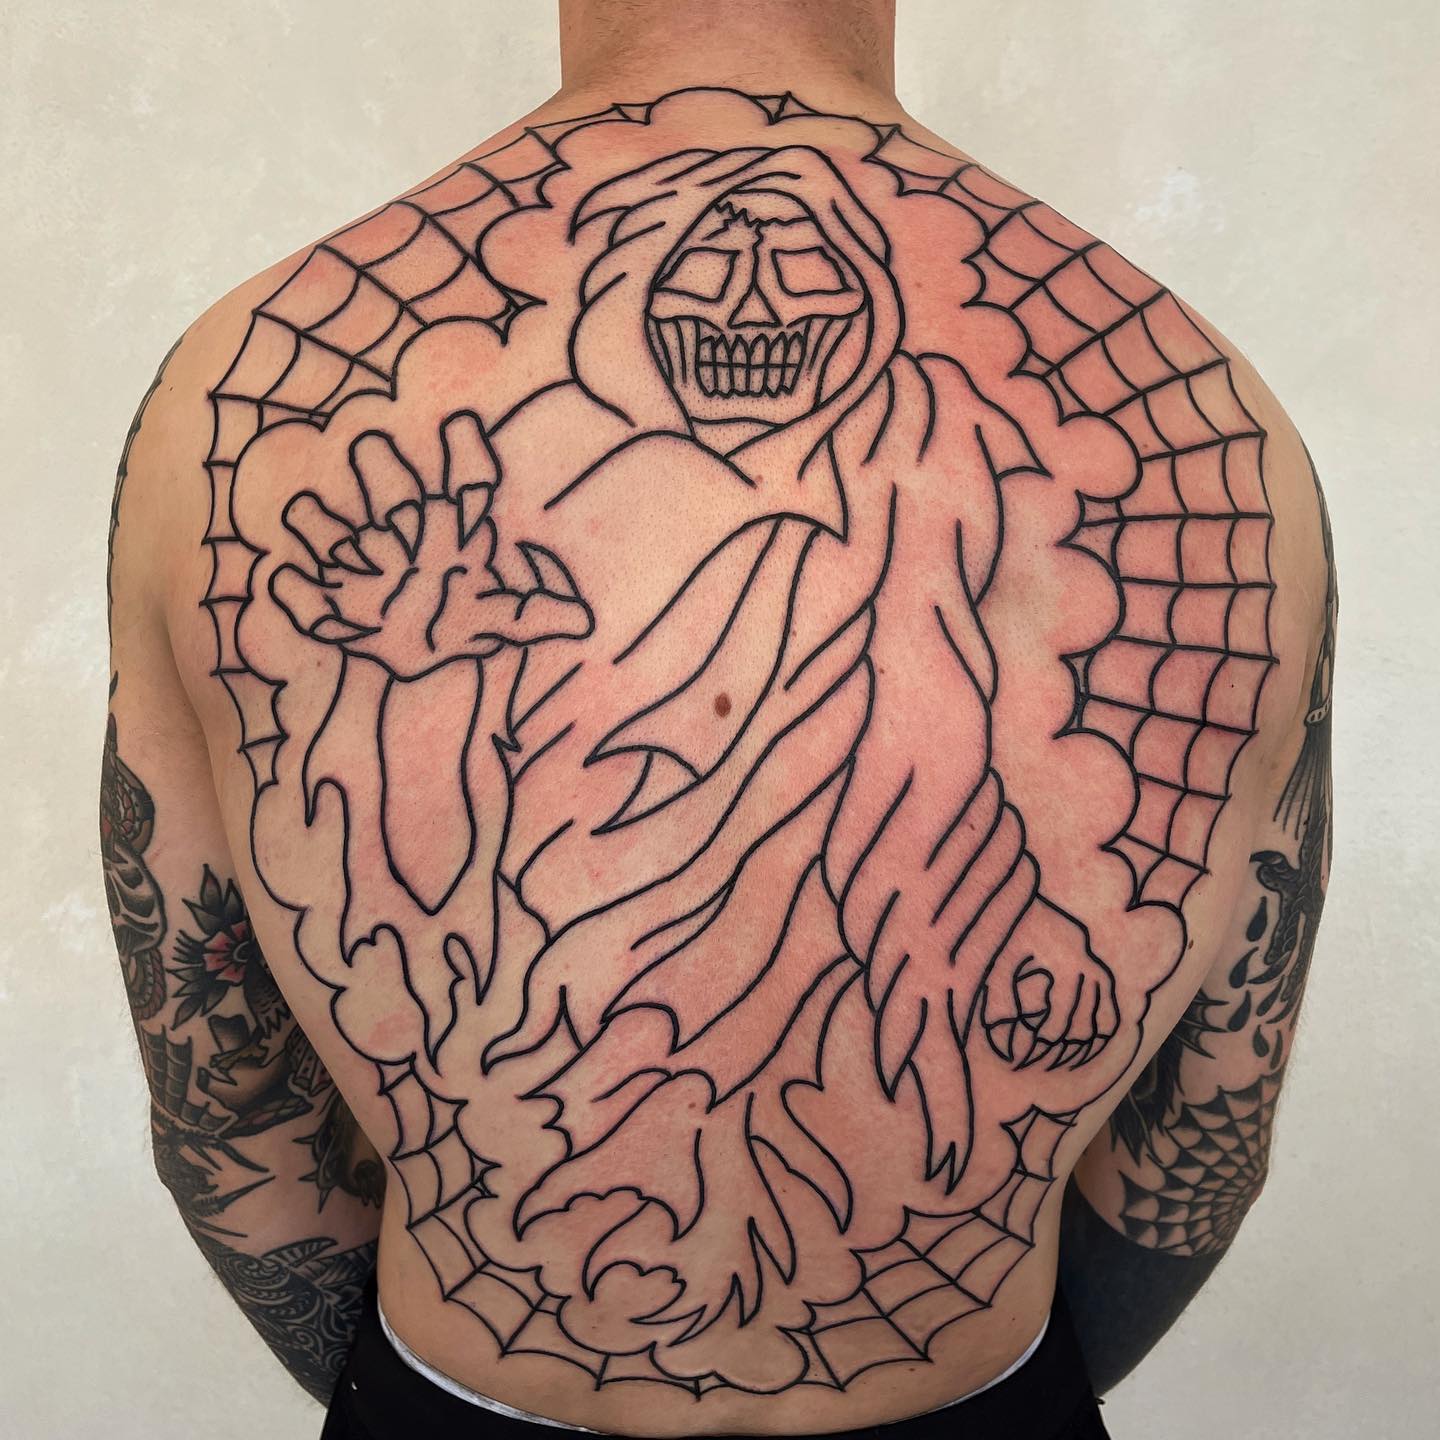 Gran tatuaje en la espalda, impresión de la muerte.